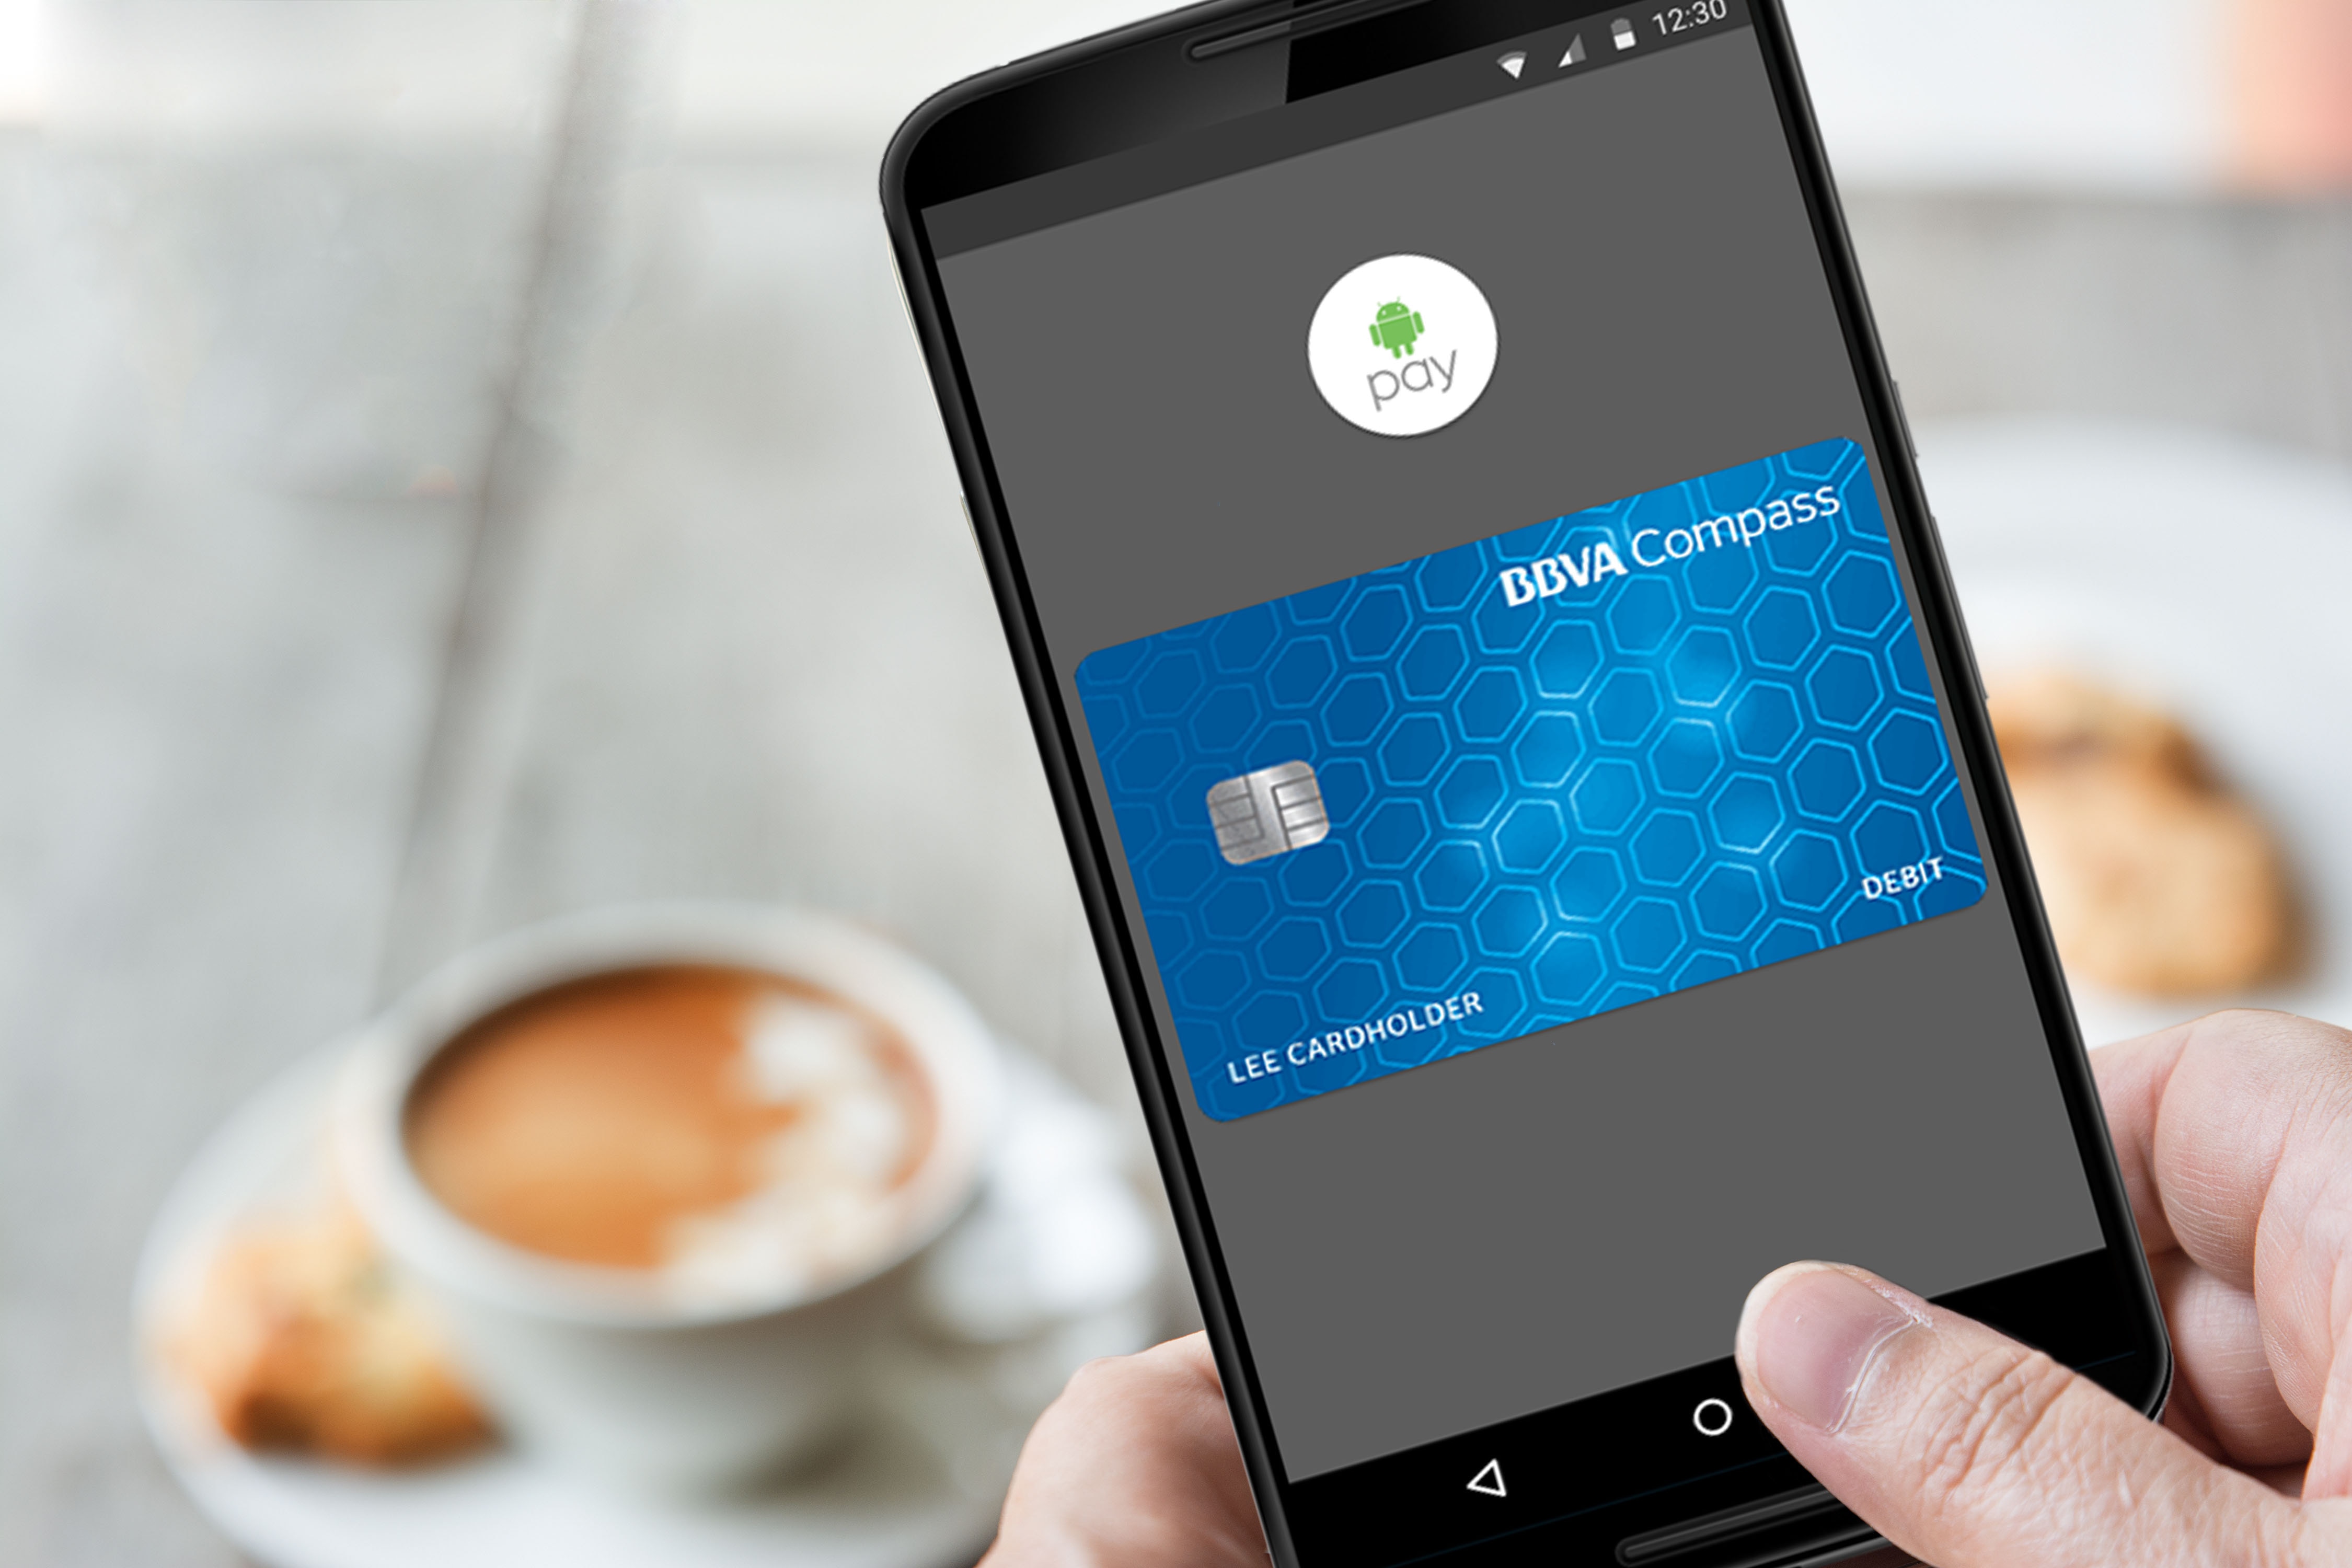 app android pay samsung customer credit debit prepaid card bbva compass